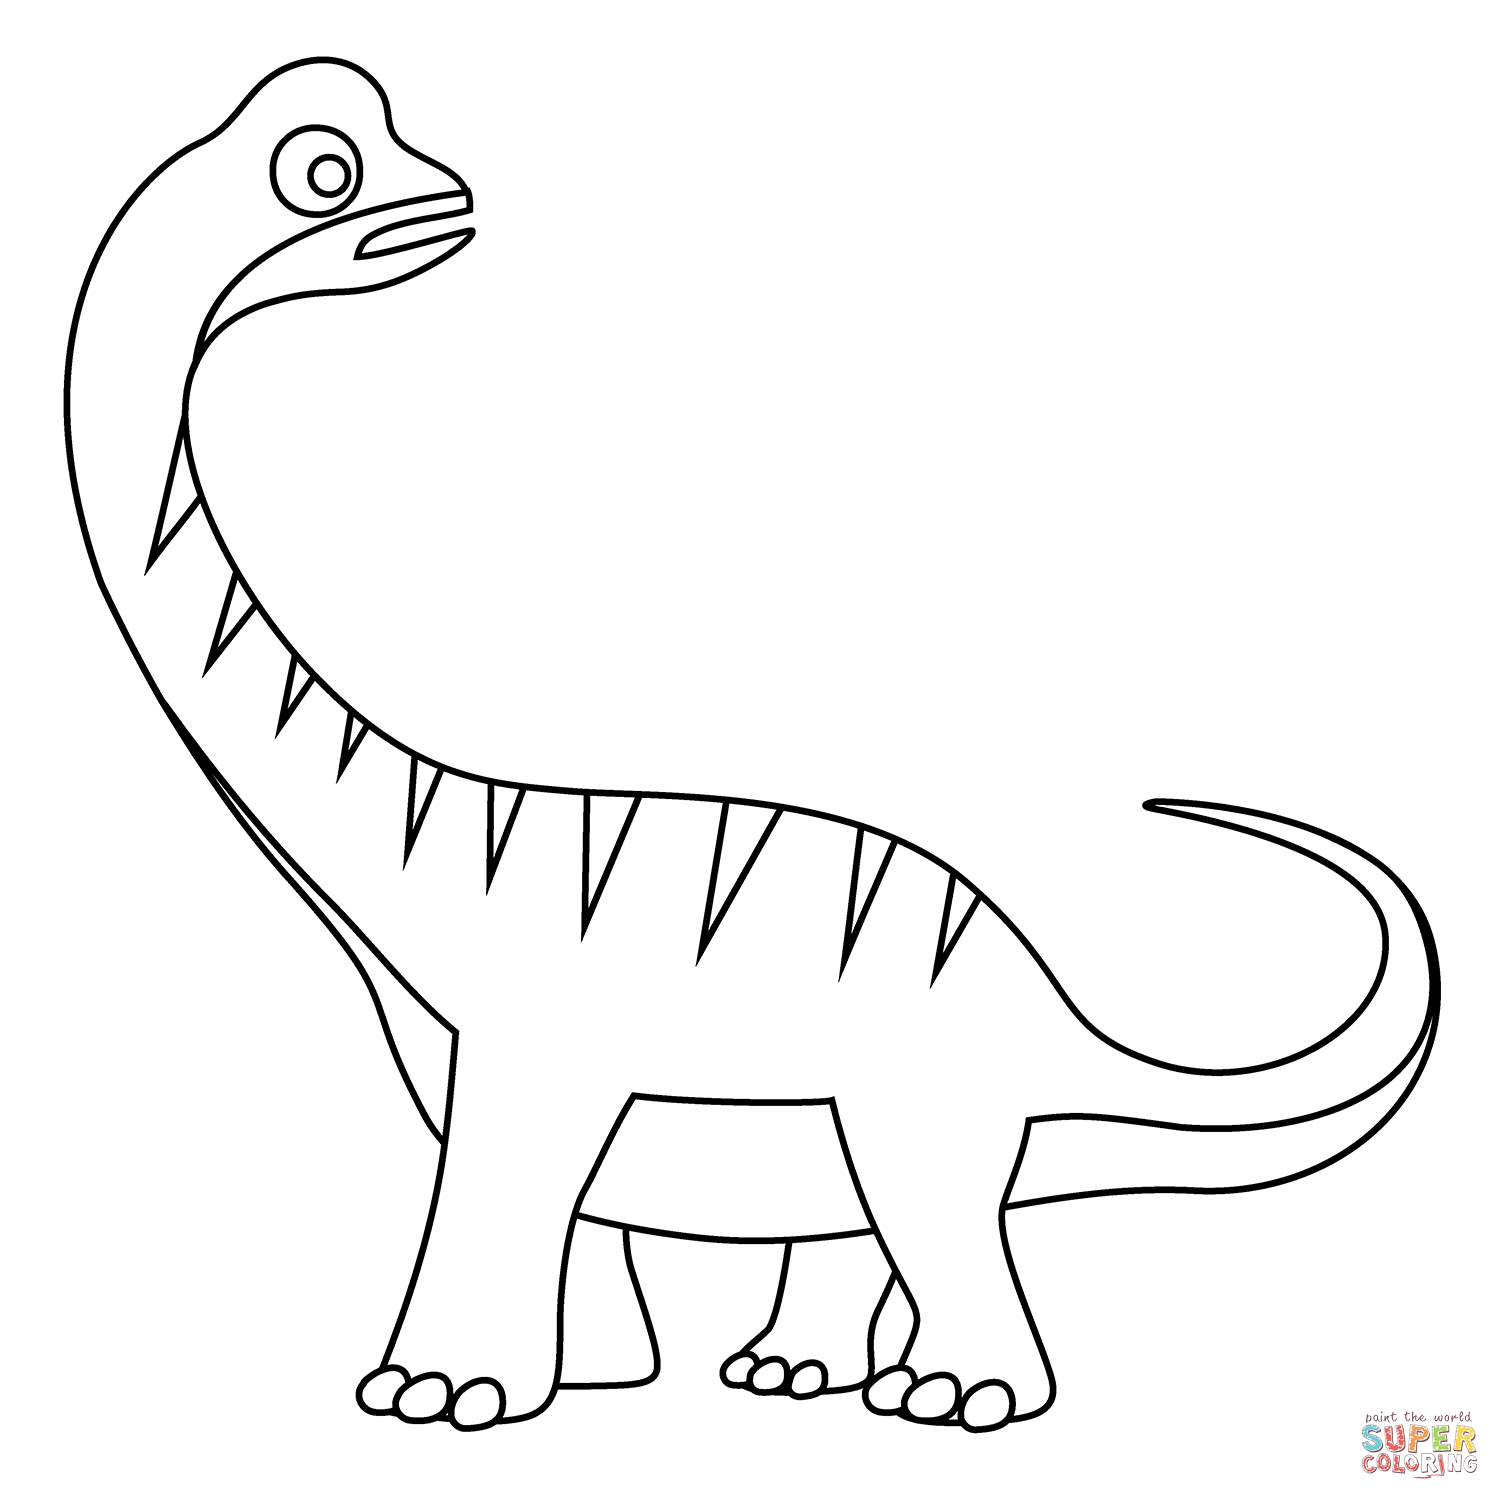 Sauropod emoji coloring page